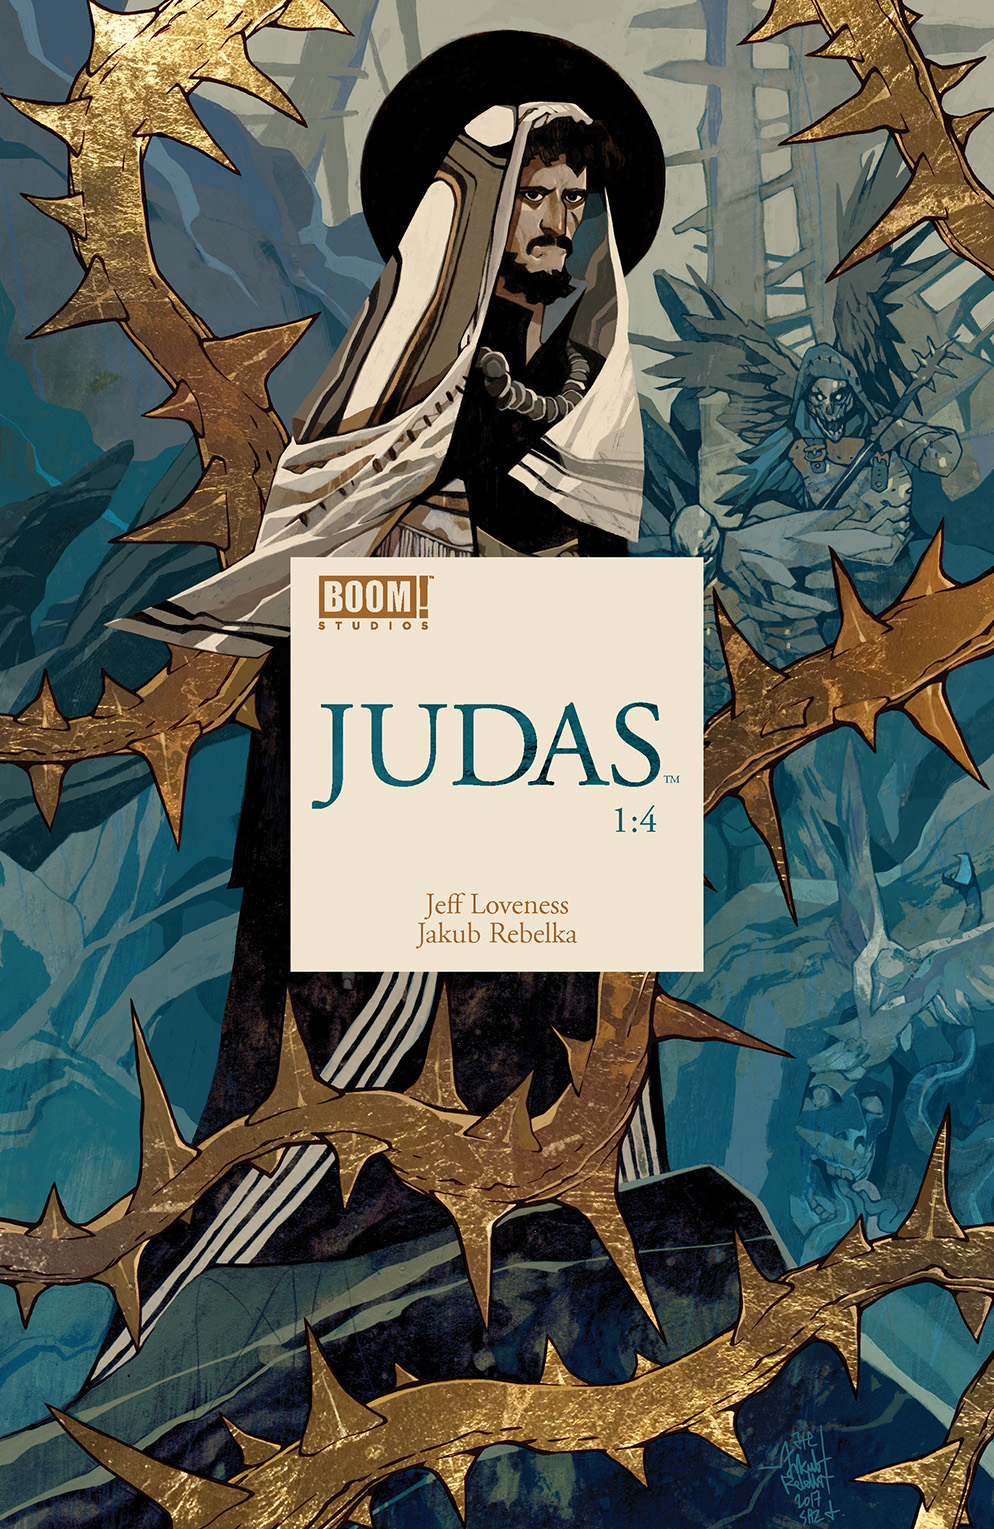 JUDAS #1 (OF 4)